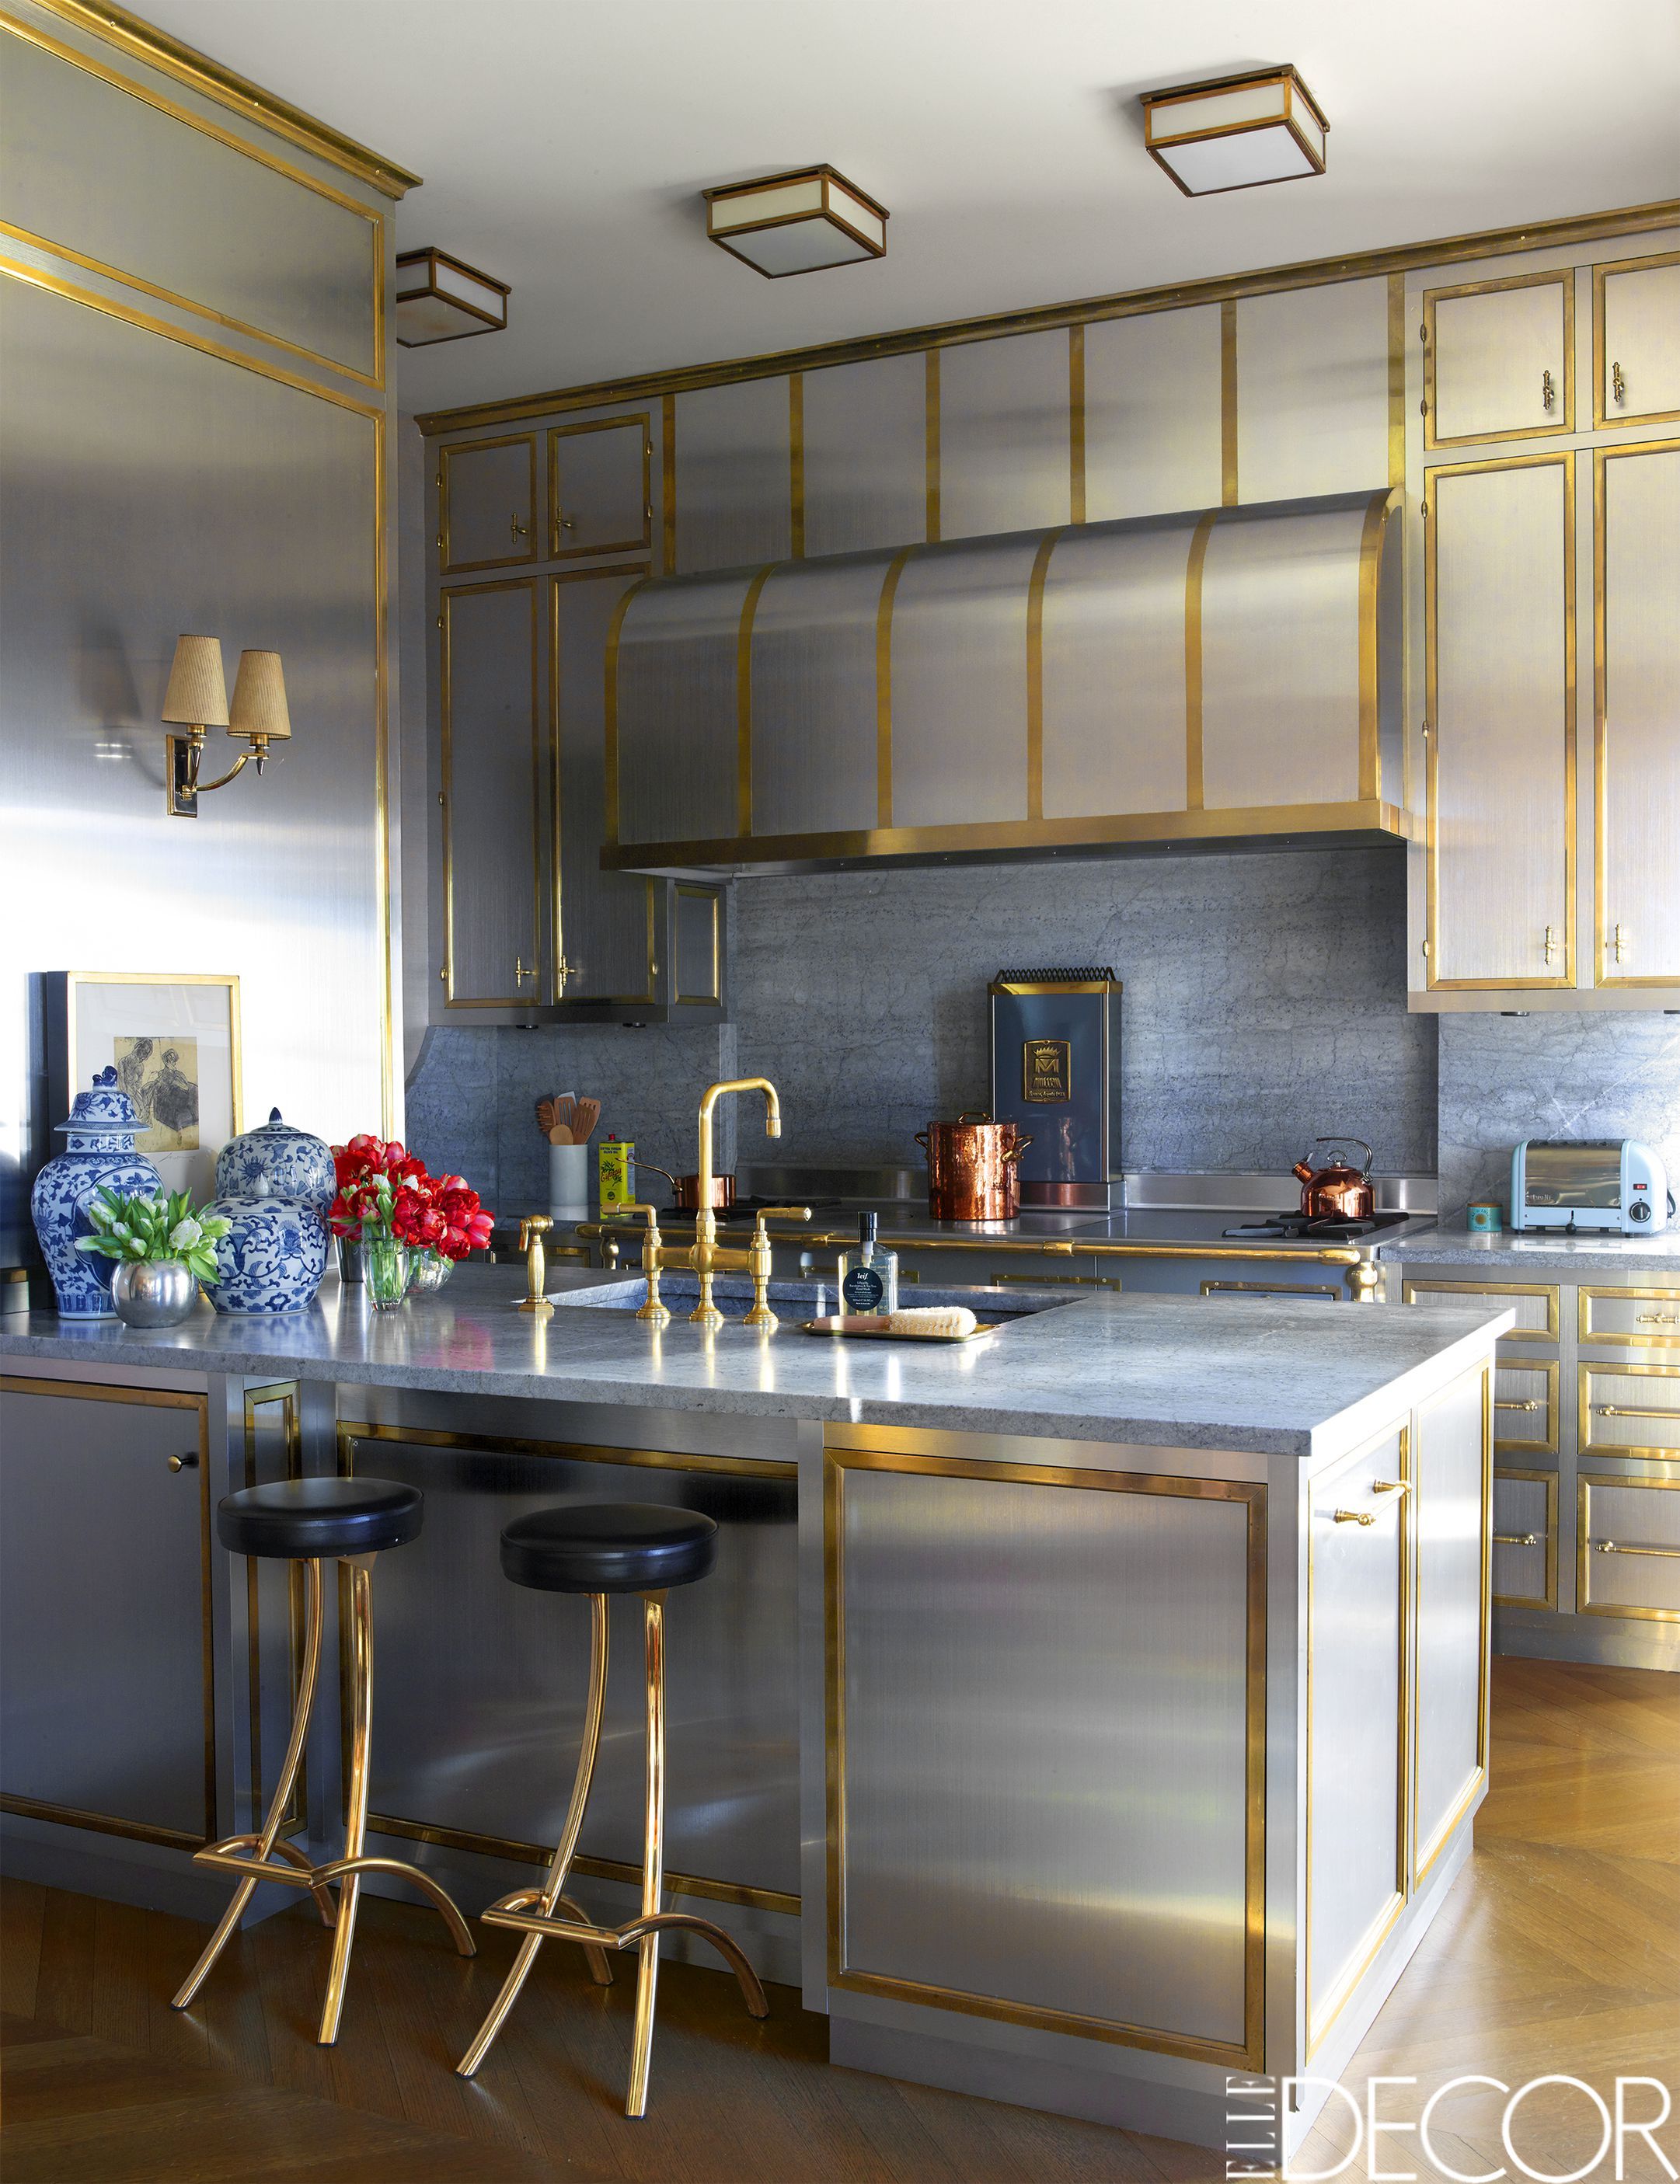 Best Home Decorating Ideas 80 Top Designer Decor Tricks Tips